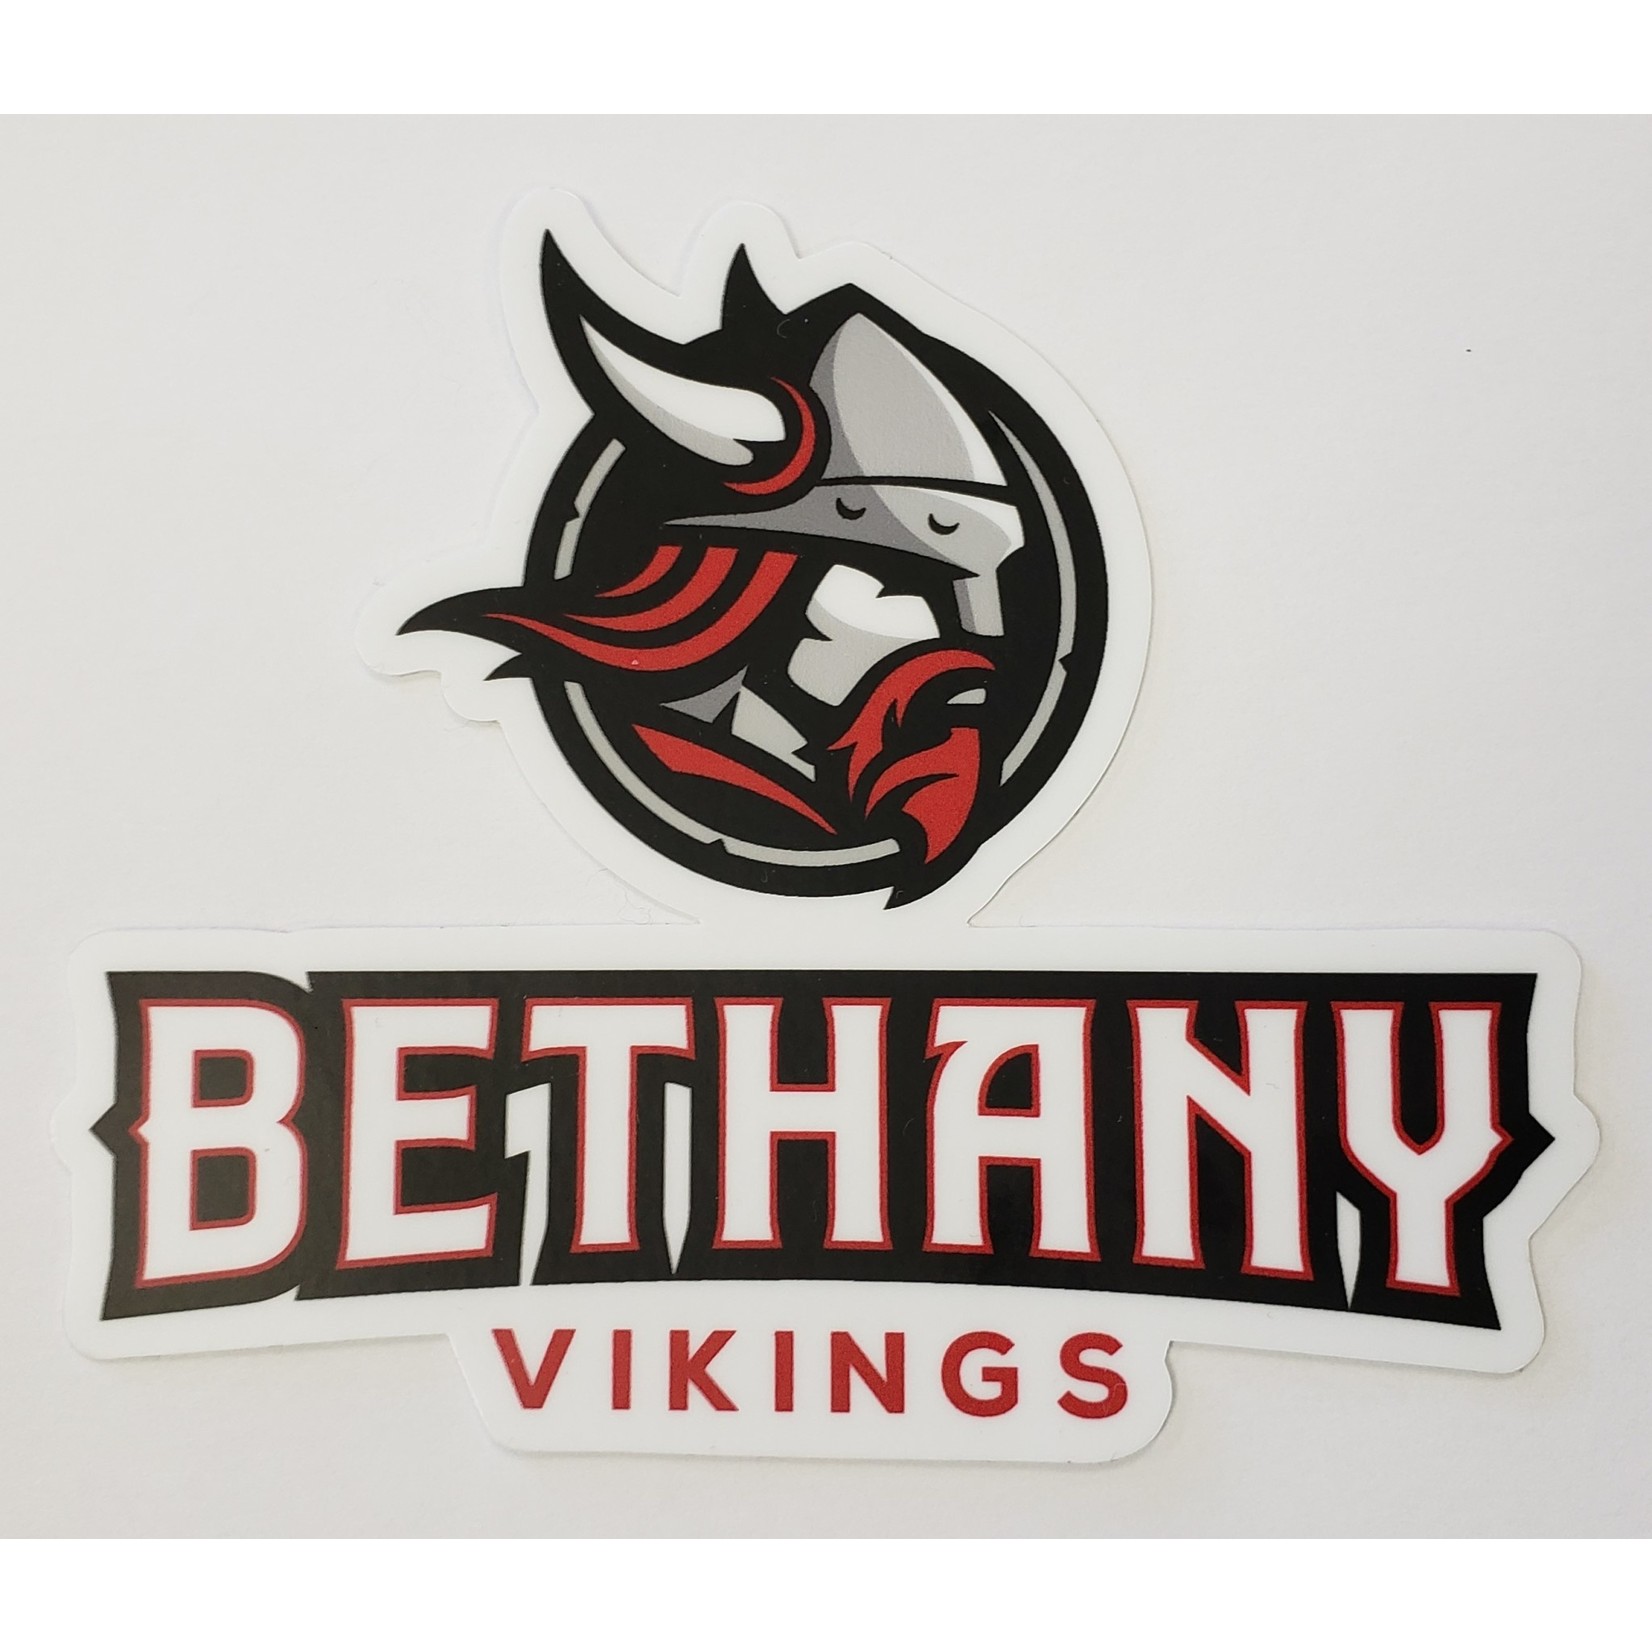 Bethany Vikings Sticker (Bumper Sticker)